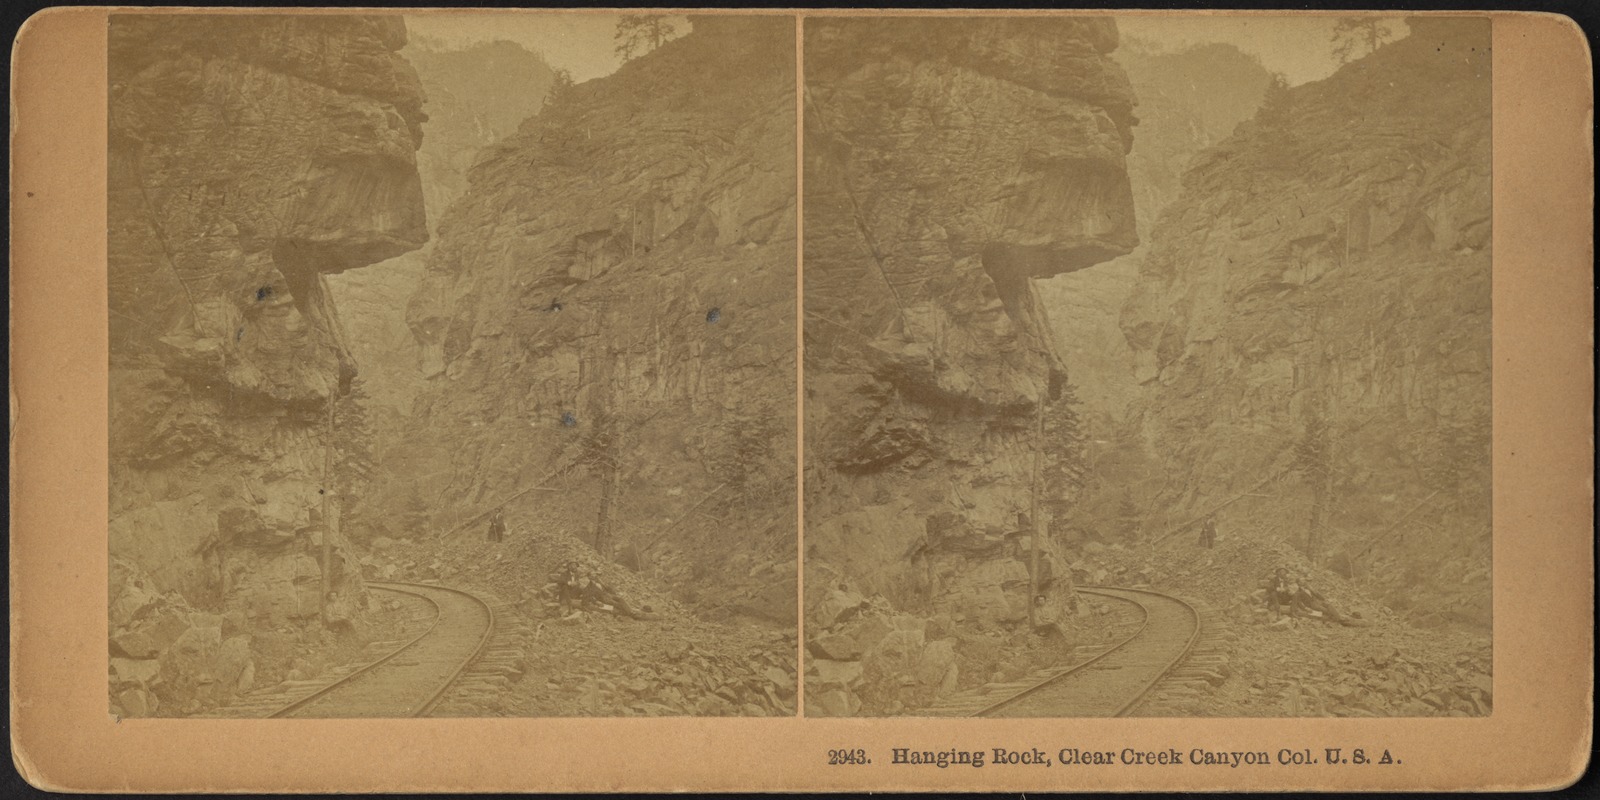 Hanging rock, Clear Creek Canyon Col. U.S.A.